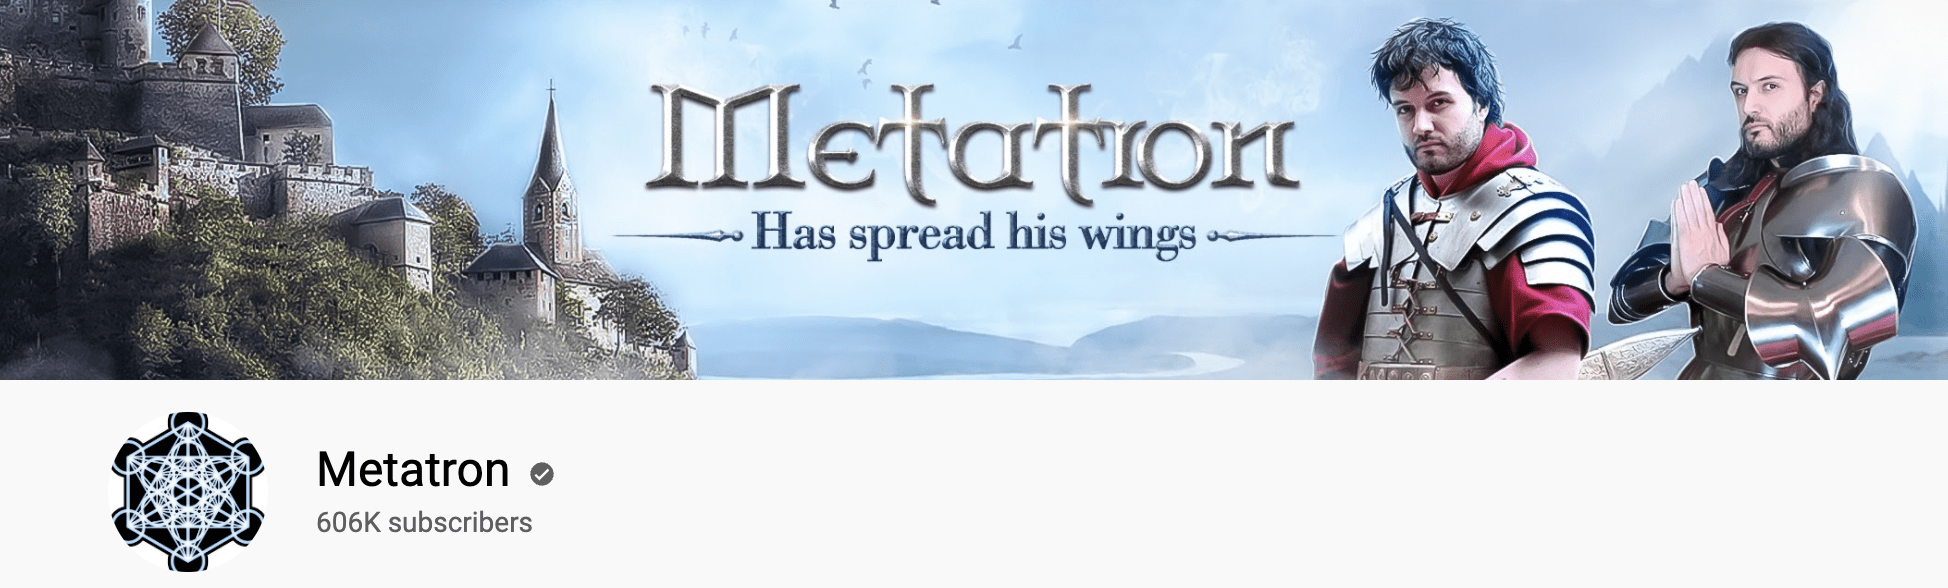 Metatron Youtube channel